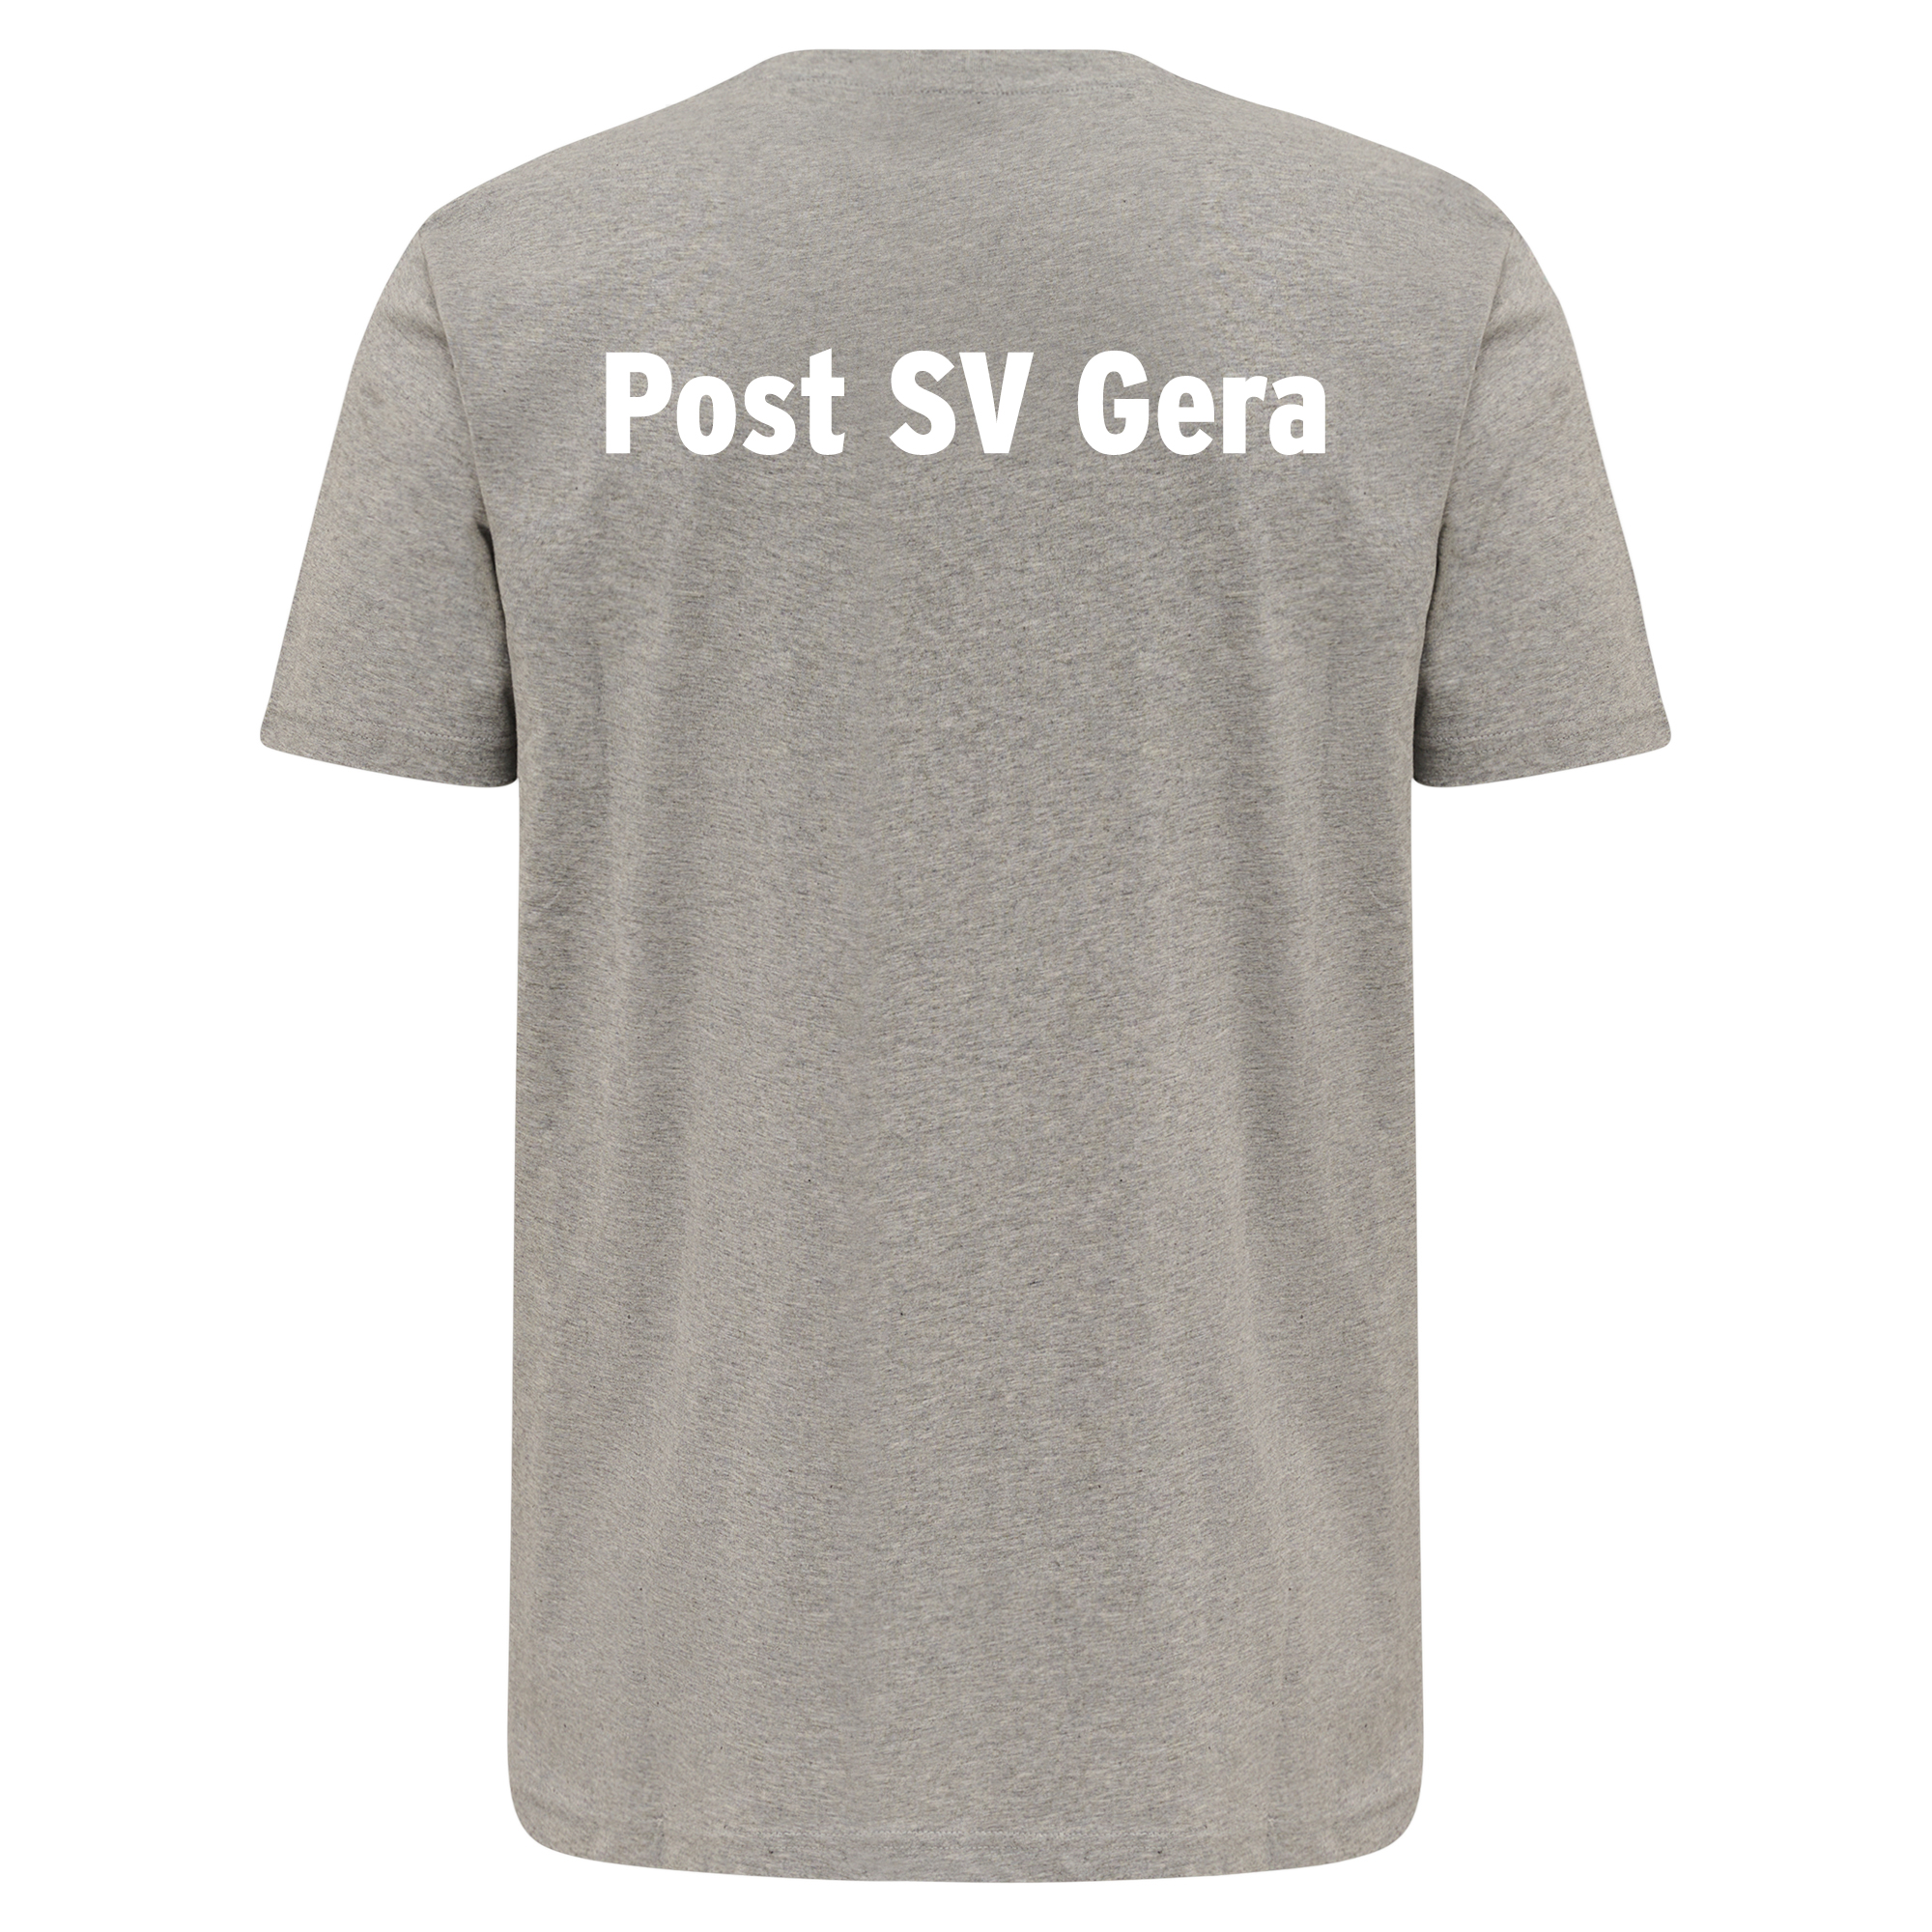 Post SV Gera T-Shirt